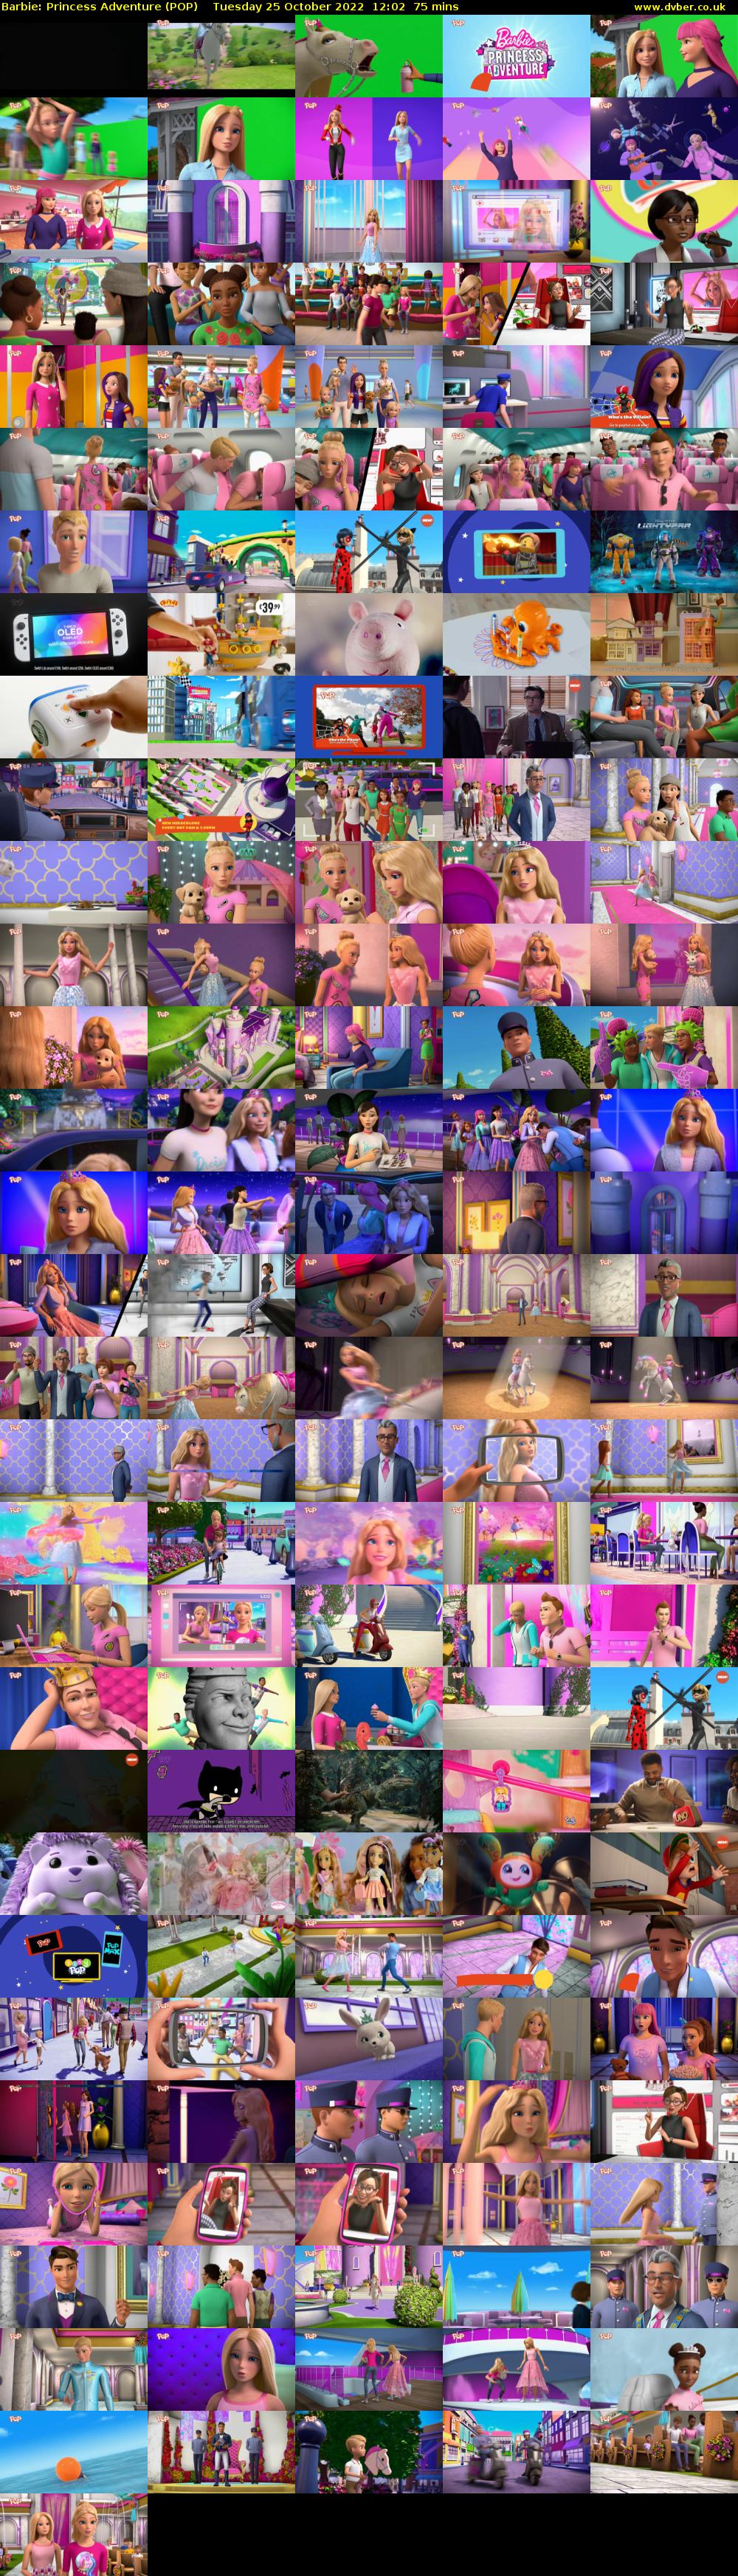 Barbie: Princess Adventure (POP) Tuesday 25 October 2022 12:02 - 13:17